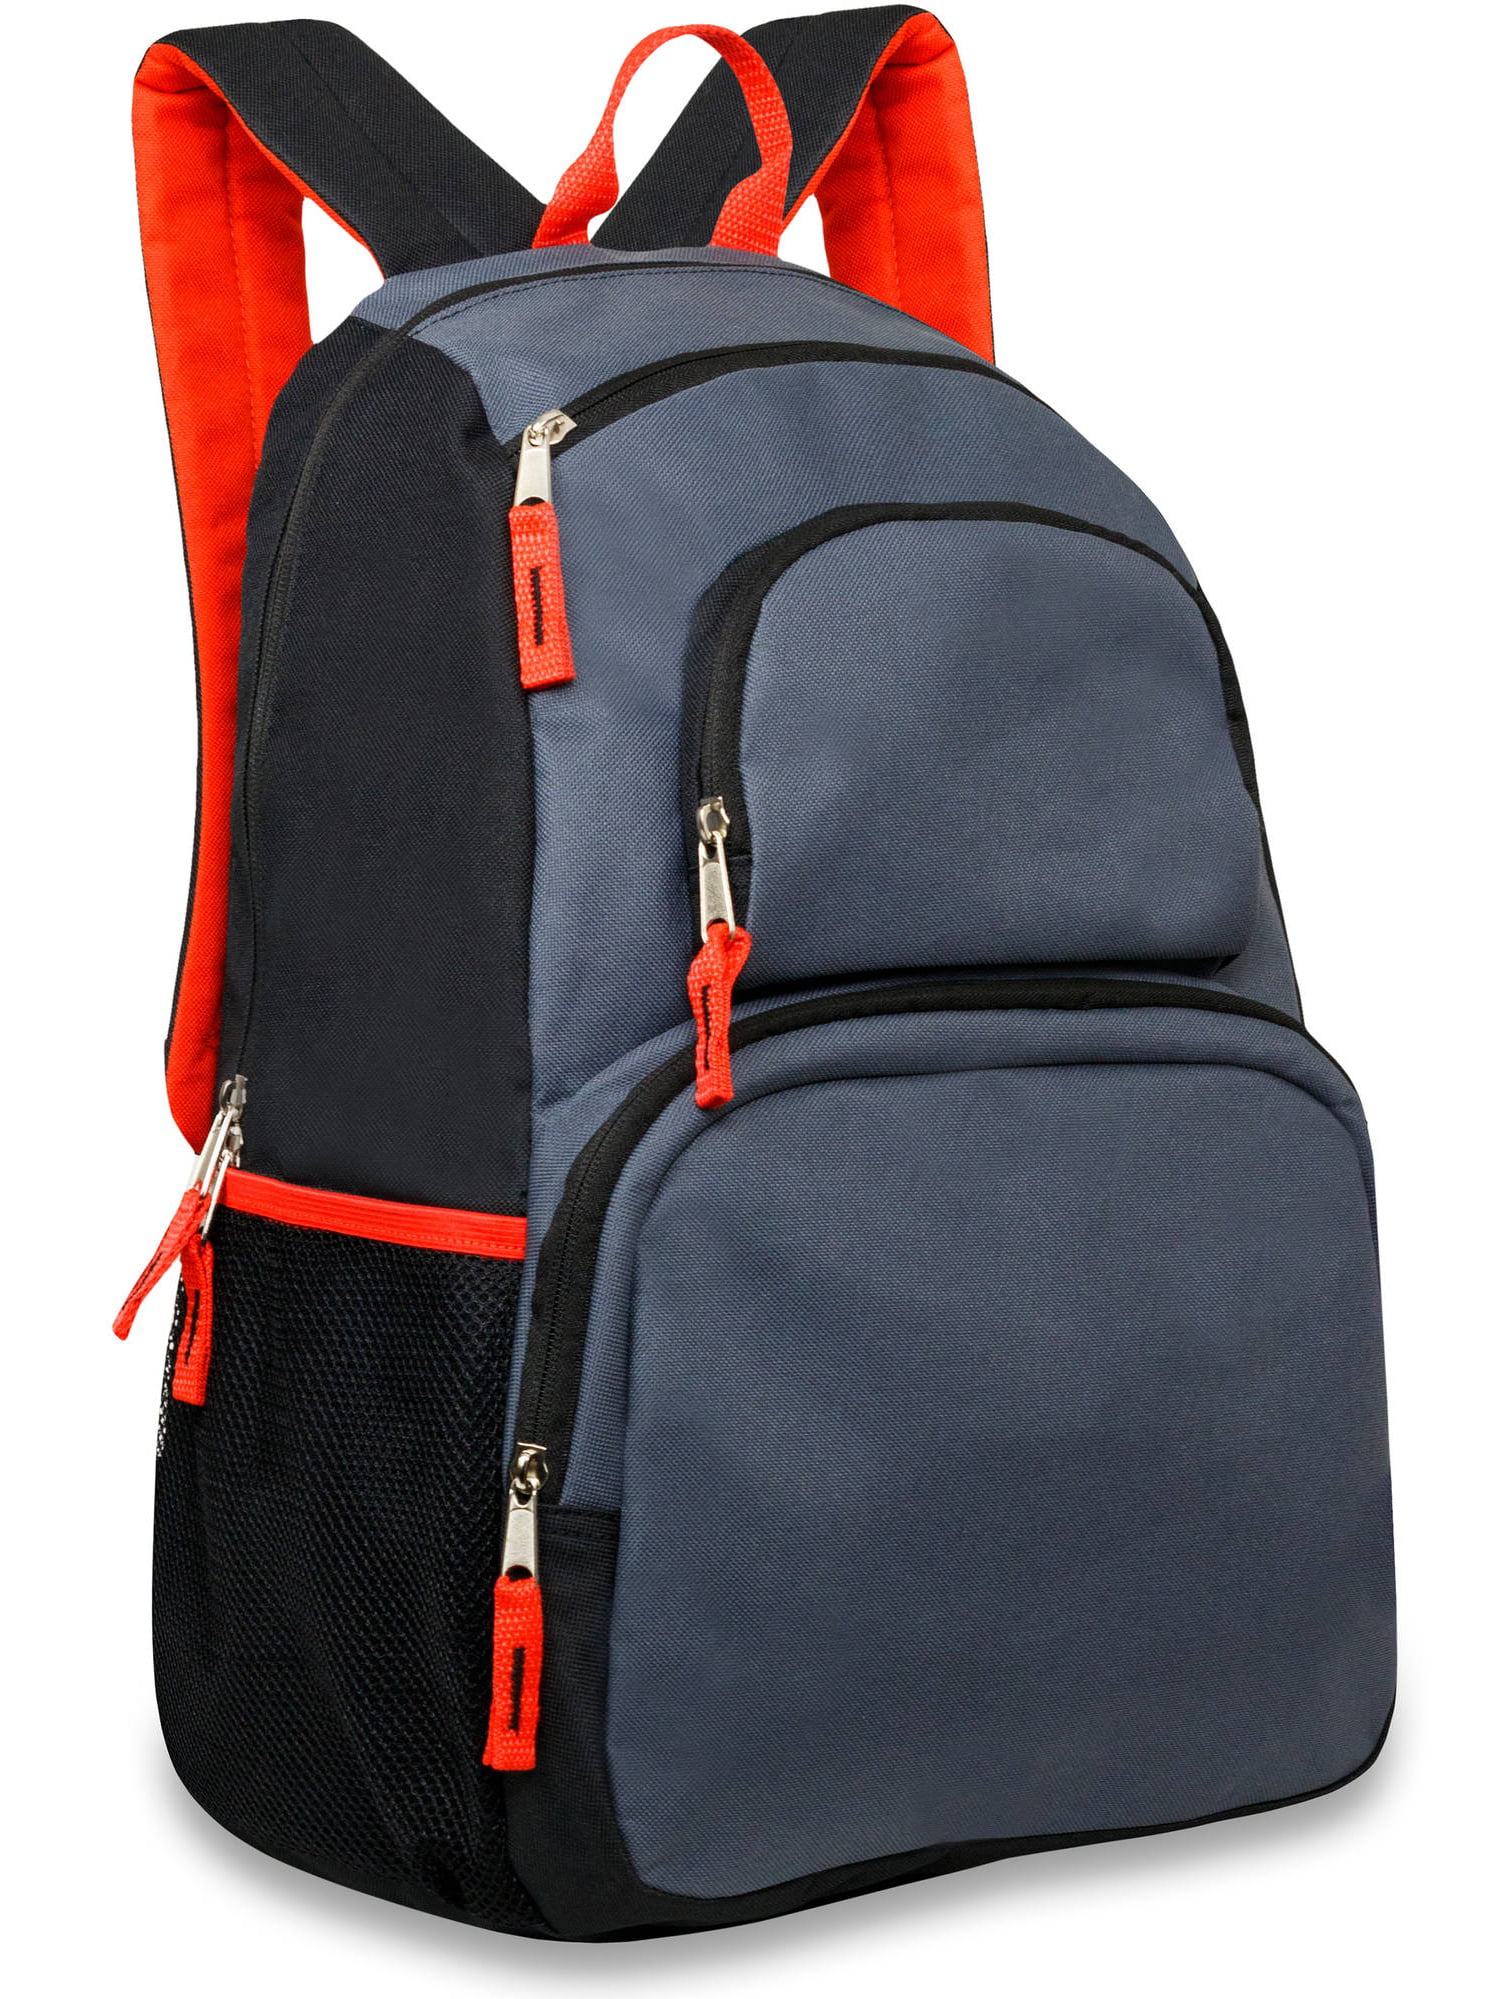 18 Inch Triple Pocket Backpack with Side Mesh Pockets - Walmart.com